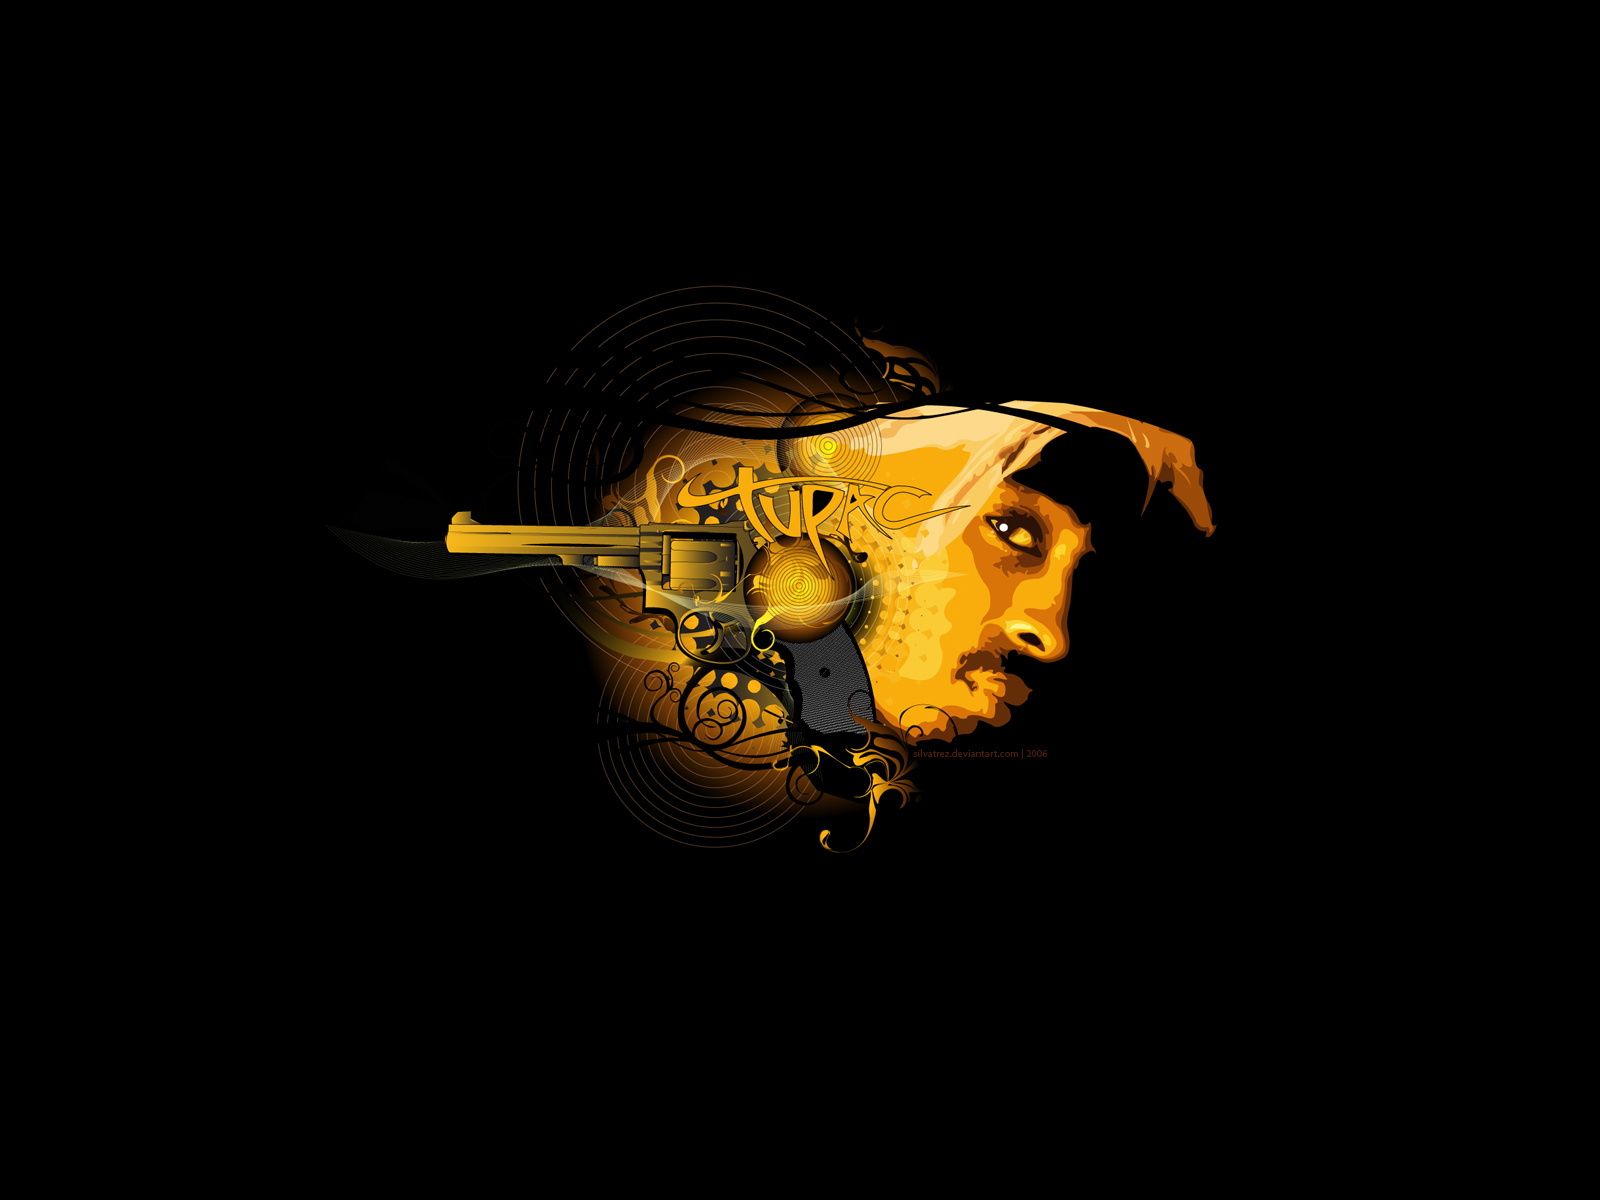 Music Wallpaper on Music Hip Hop Rap 2pac Tupac Shakur Hiphop Hd Wallpaper Of Music